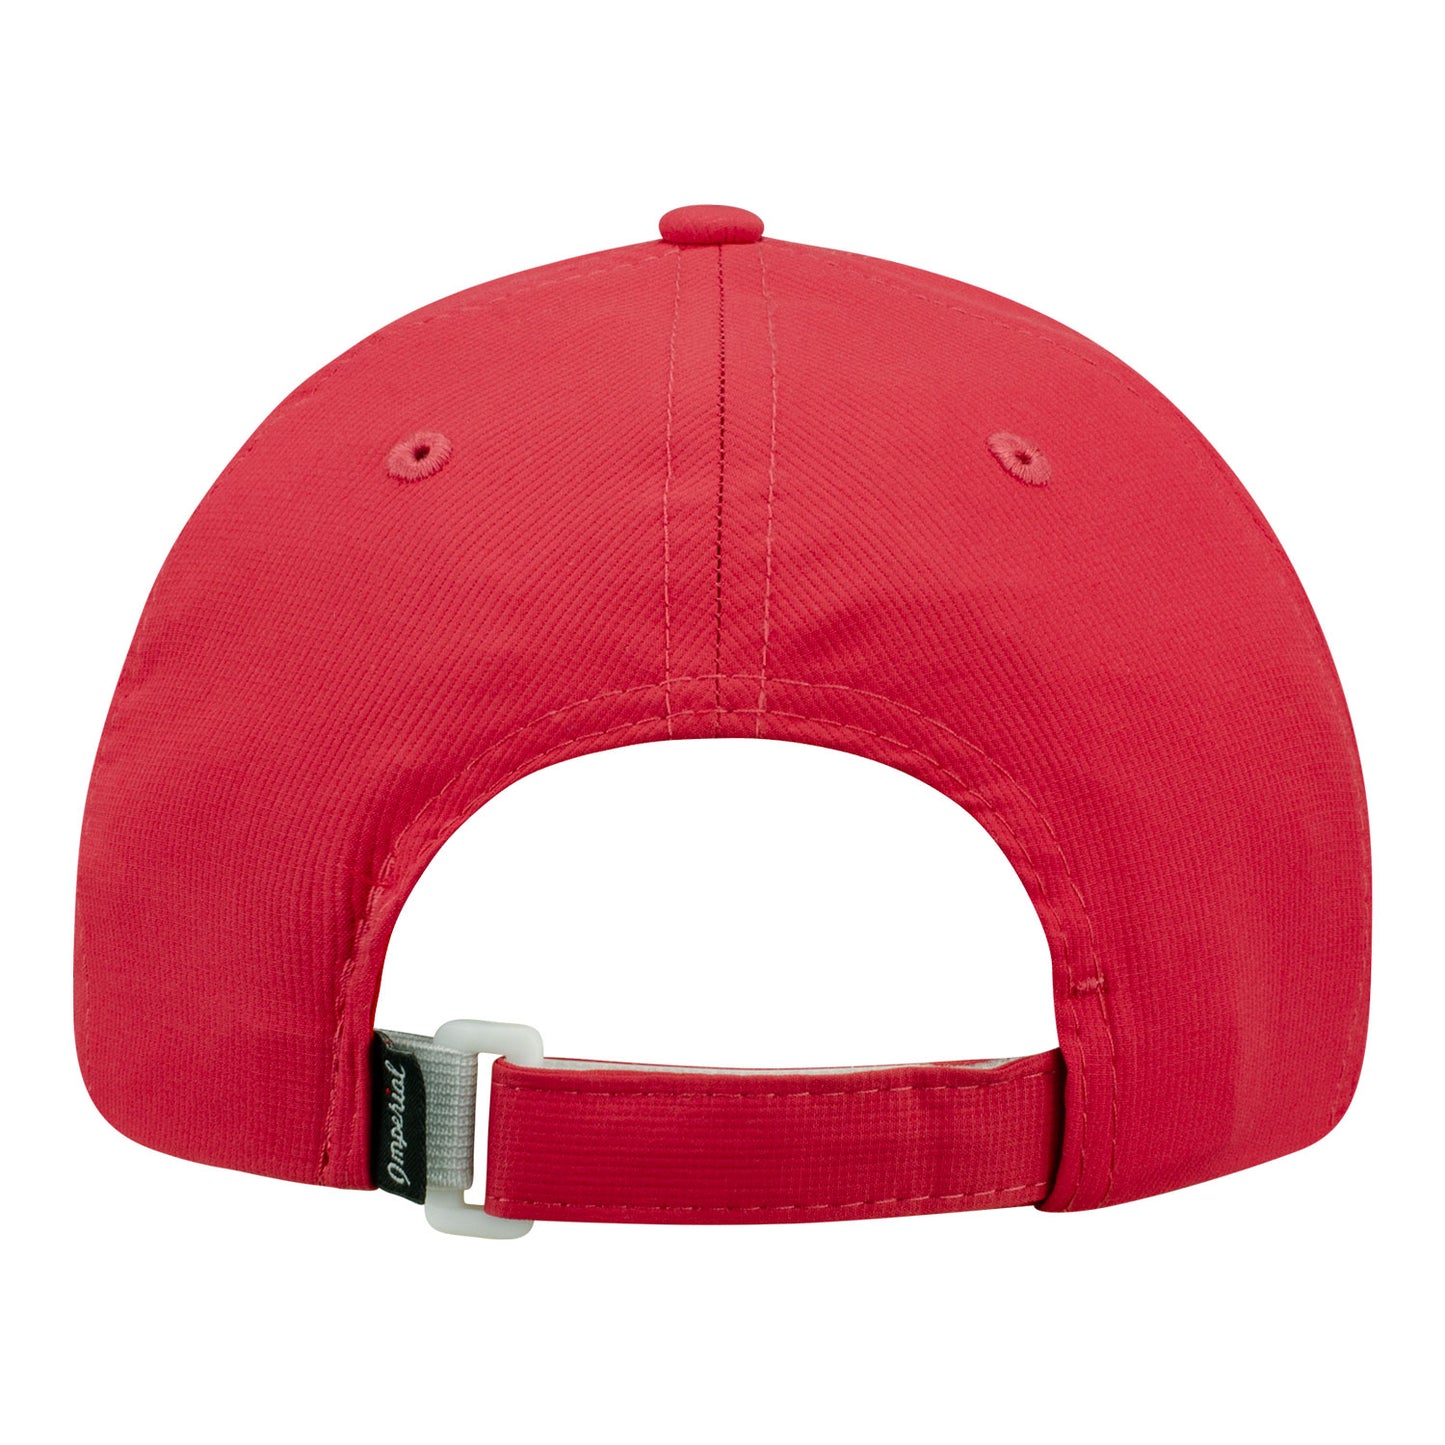 Imperial LPGA Women's Hat in Nantucket Red - Back View